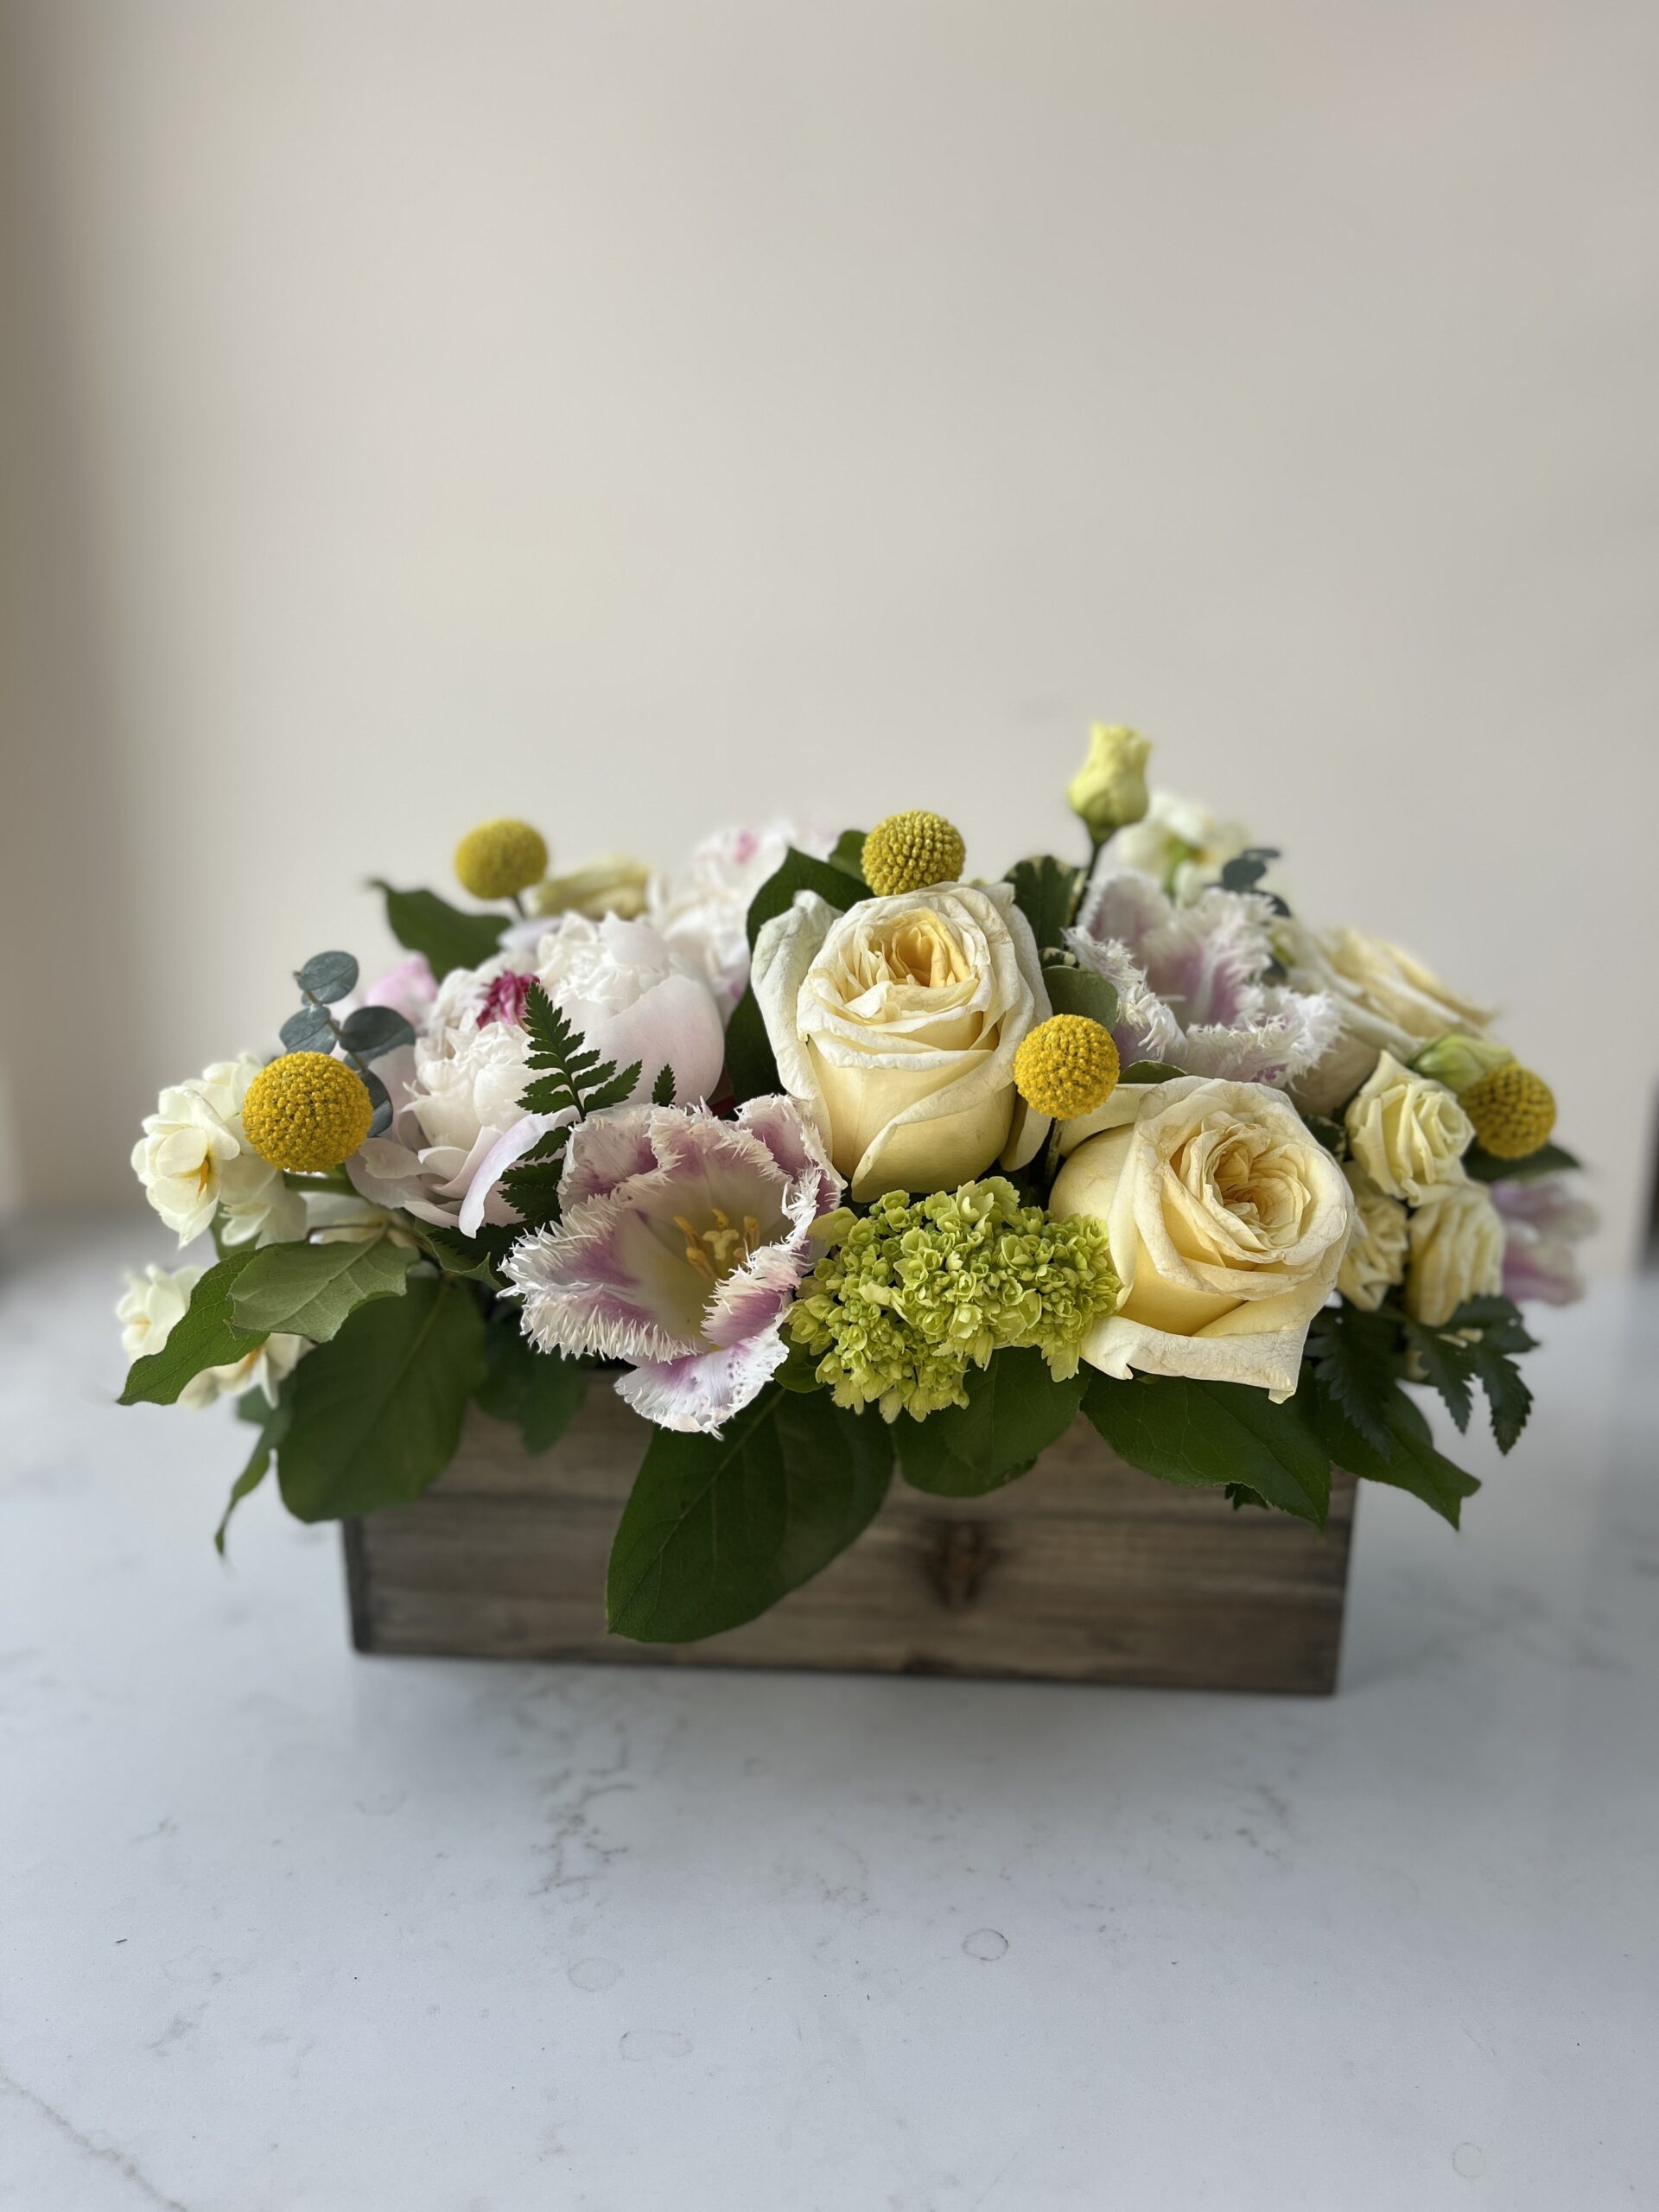 Easter Flower Arrangements | Easter Flower Delivery in NY